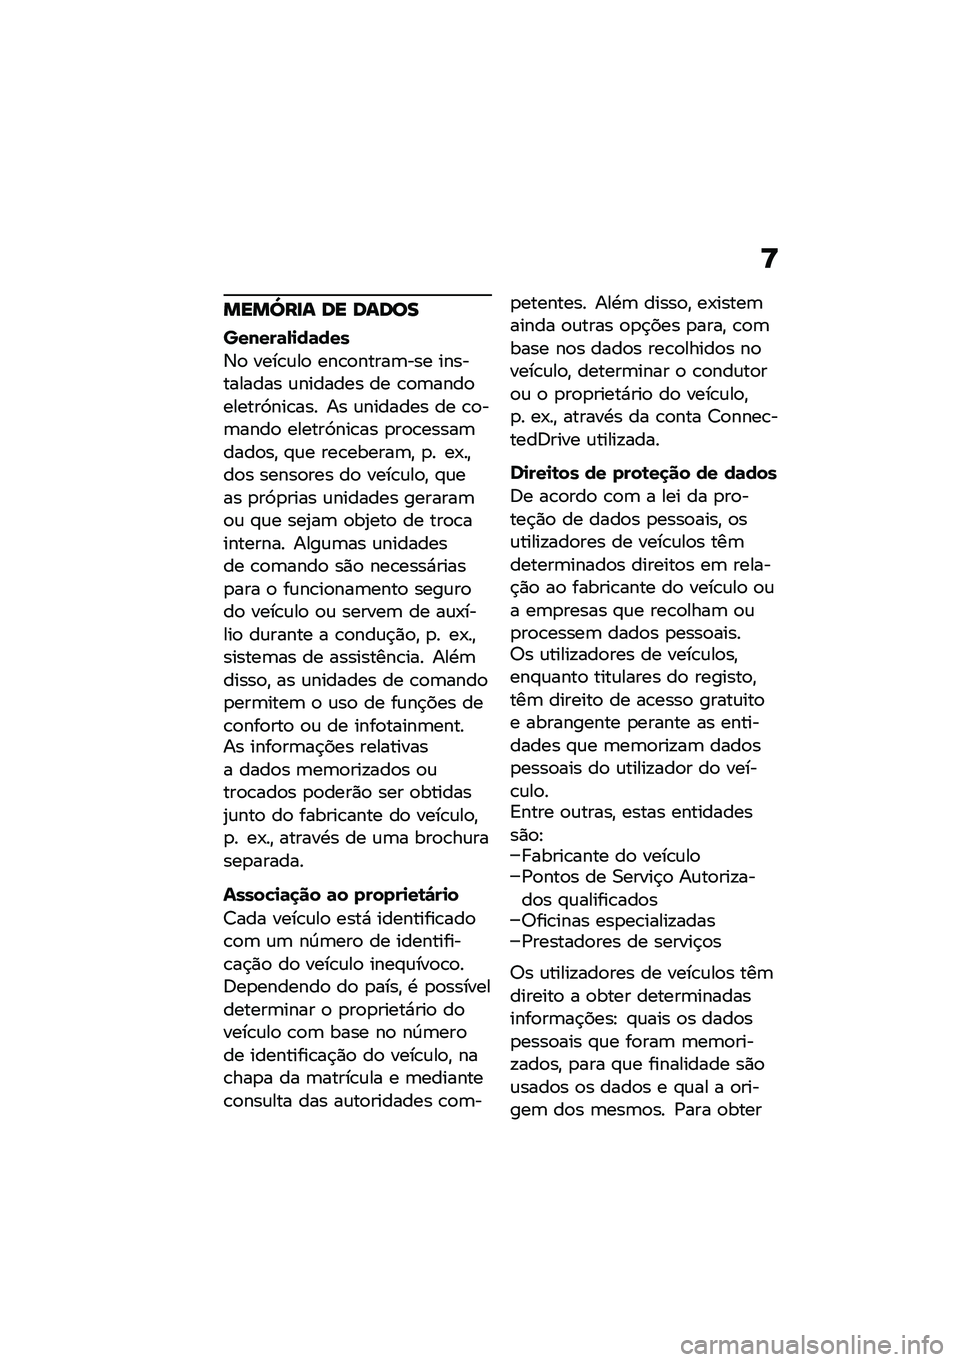 BMW MOTORRAD C 400 GT 2020  Manual do condutor (in Portuguese) �<
����Z��
� �� �����
� �����	�-�
��	���
�3�
 ����\b�\f��
 ���\b�
�����	��� ����������� �\f������� �� �\b�
�	����
������>���\b��� ��